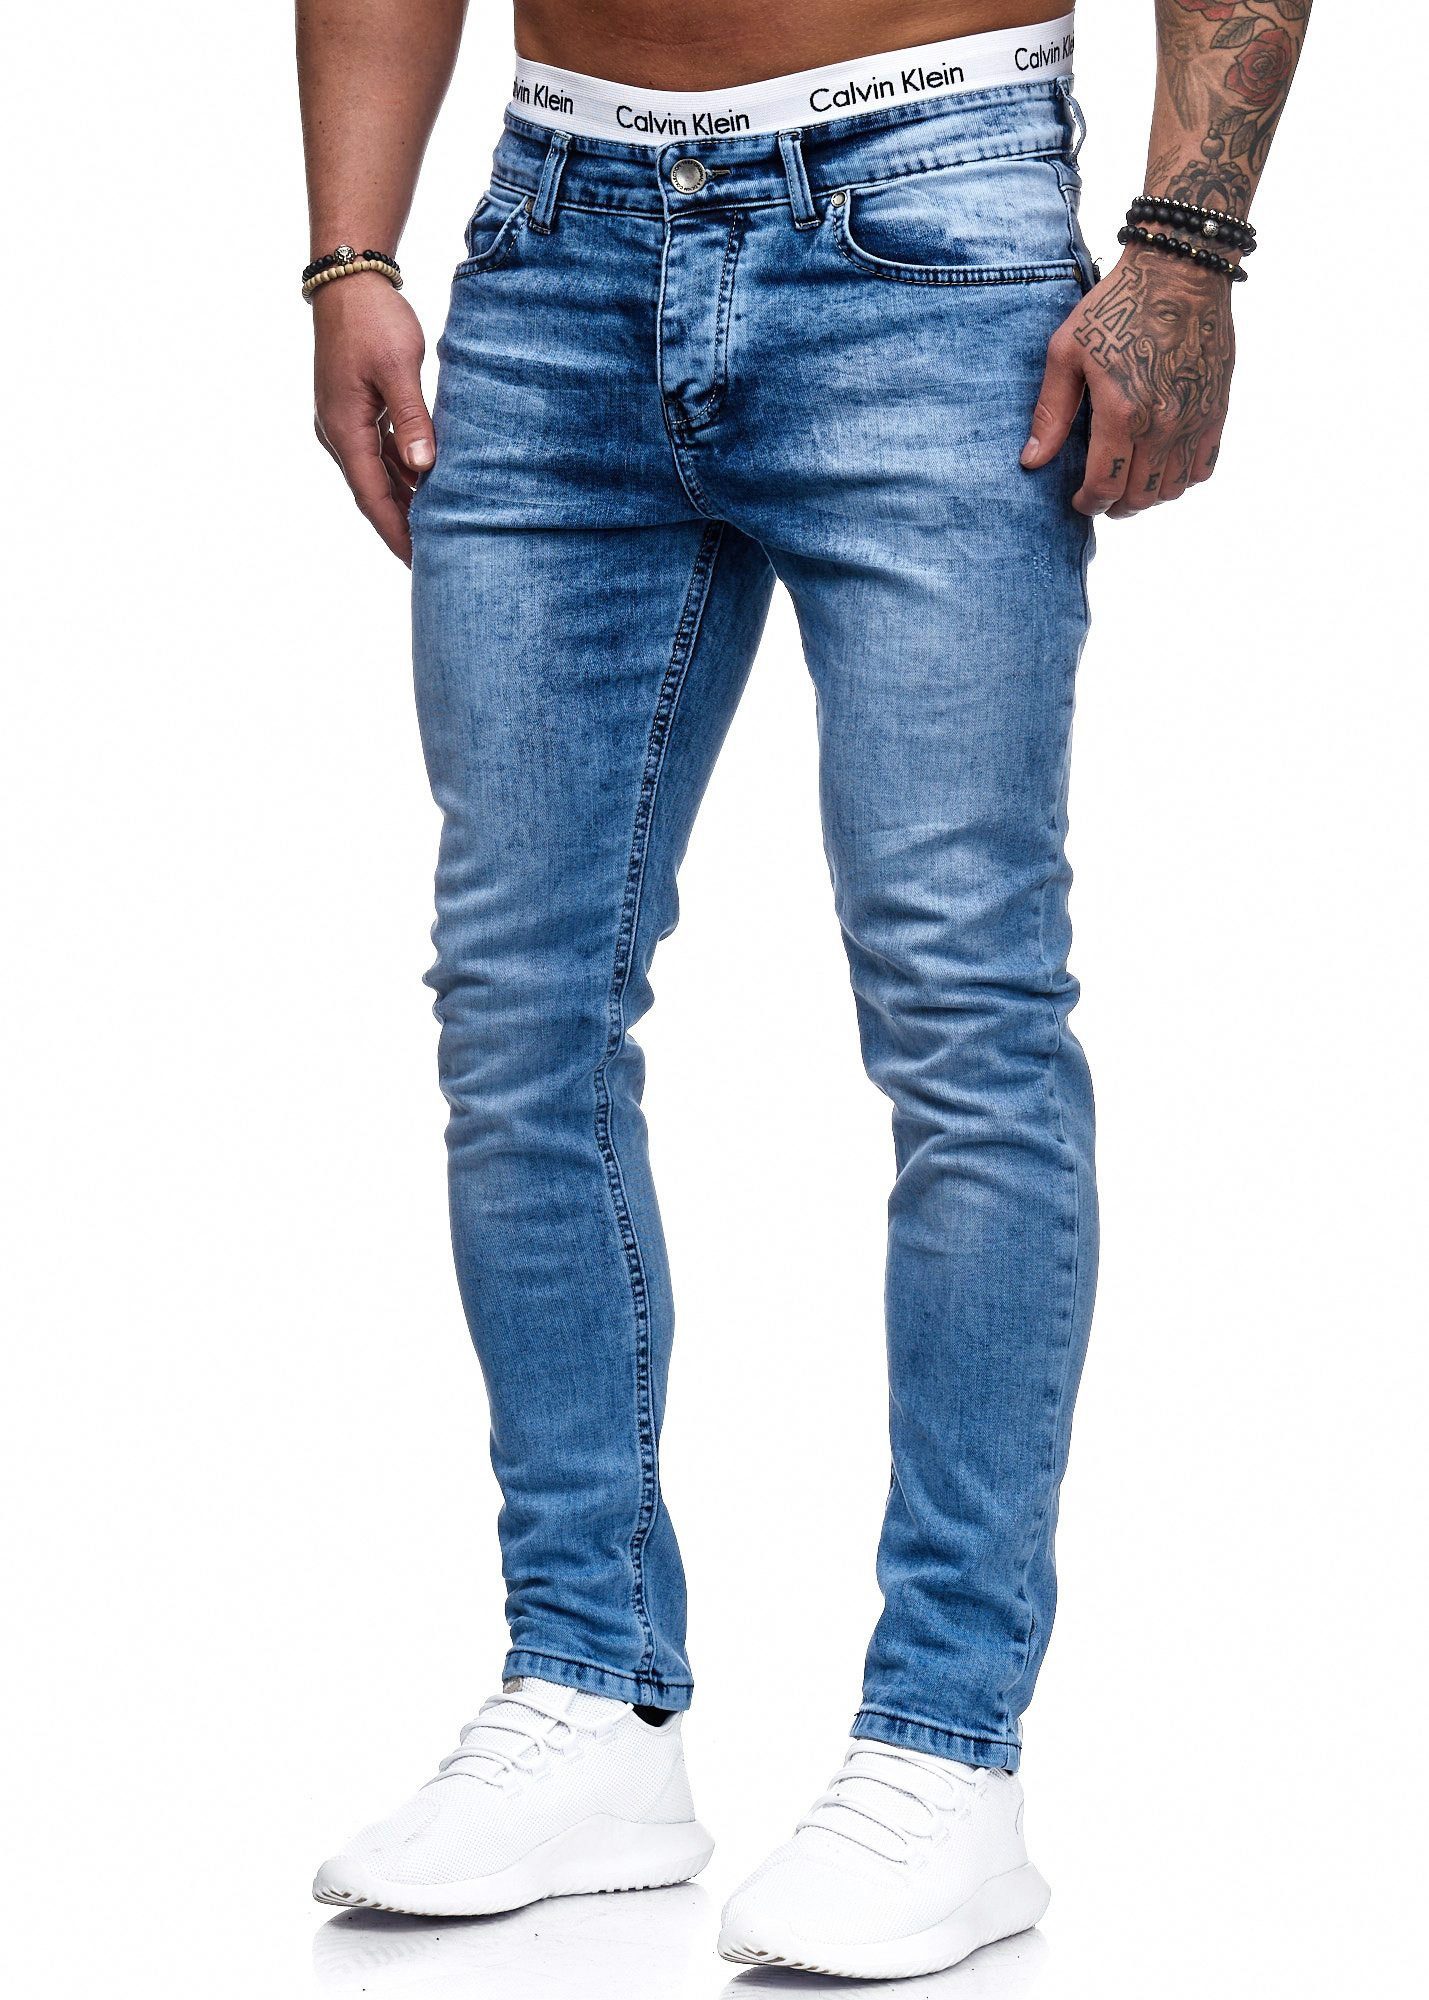 Chino Hose Slim Herren Code47 Fit Jeanshose Slim-fit-Jeans Hellblau 5080 Basic Stretch Jeans Designer